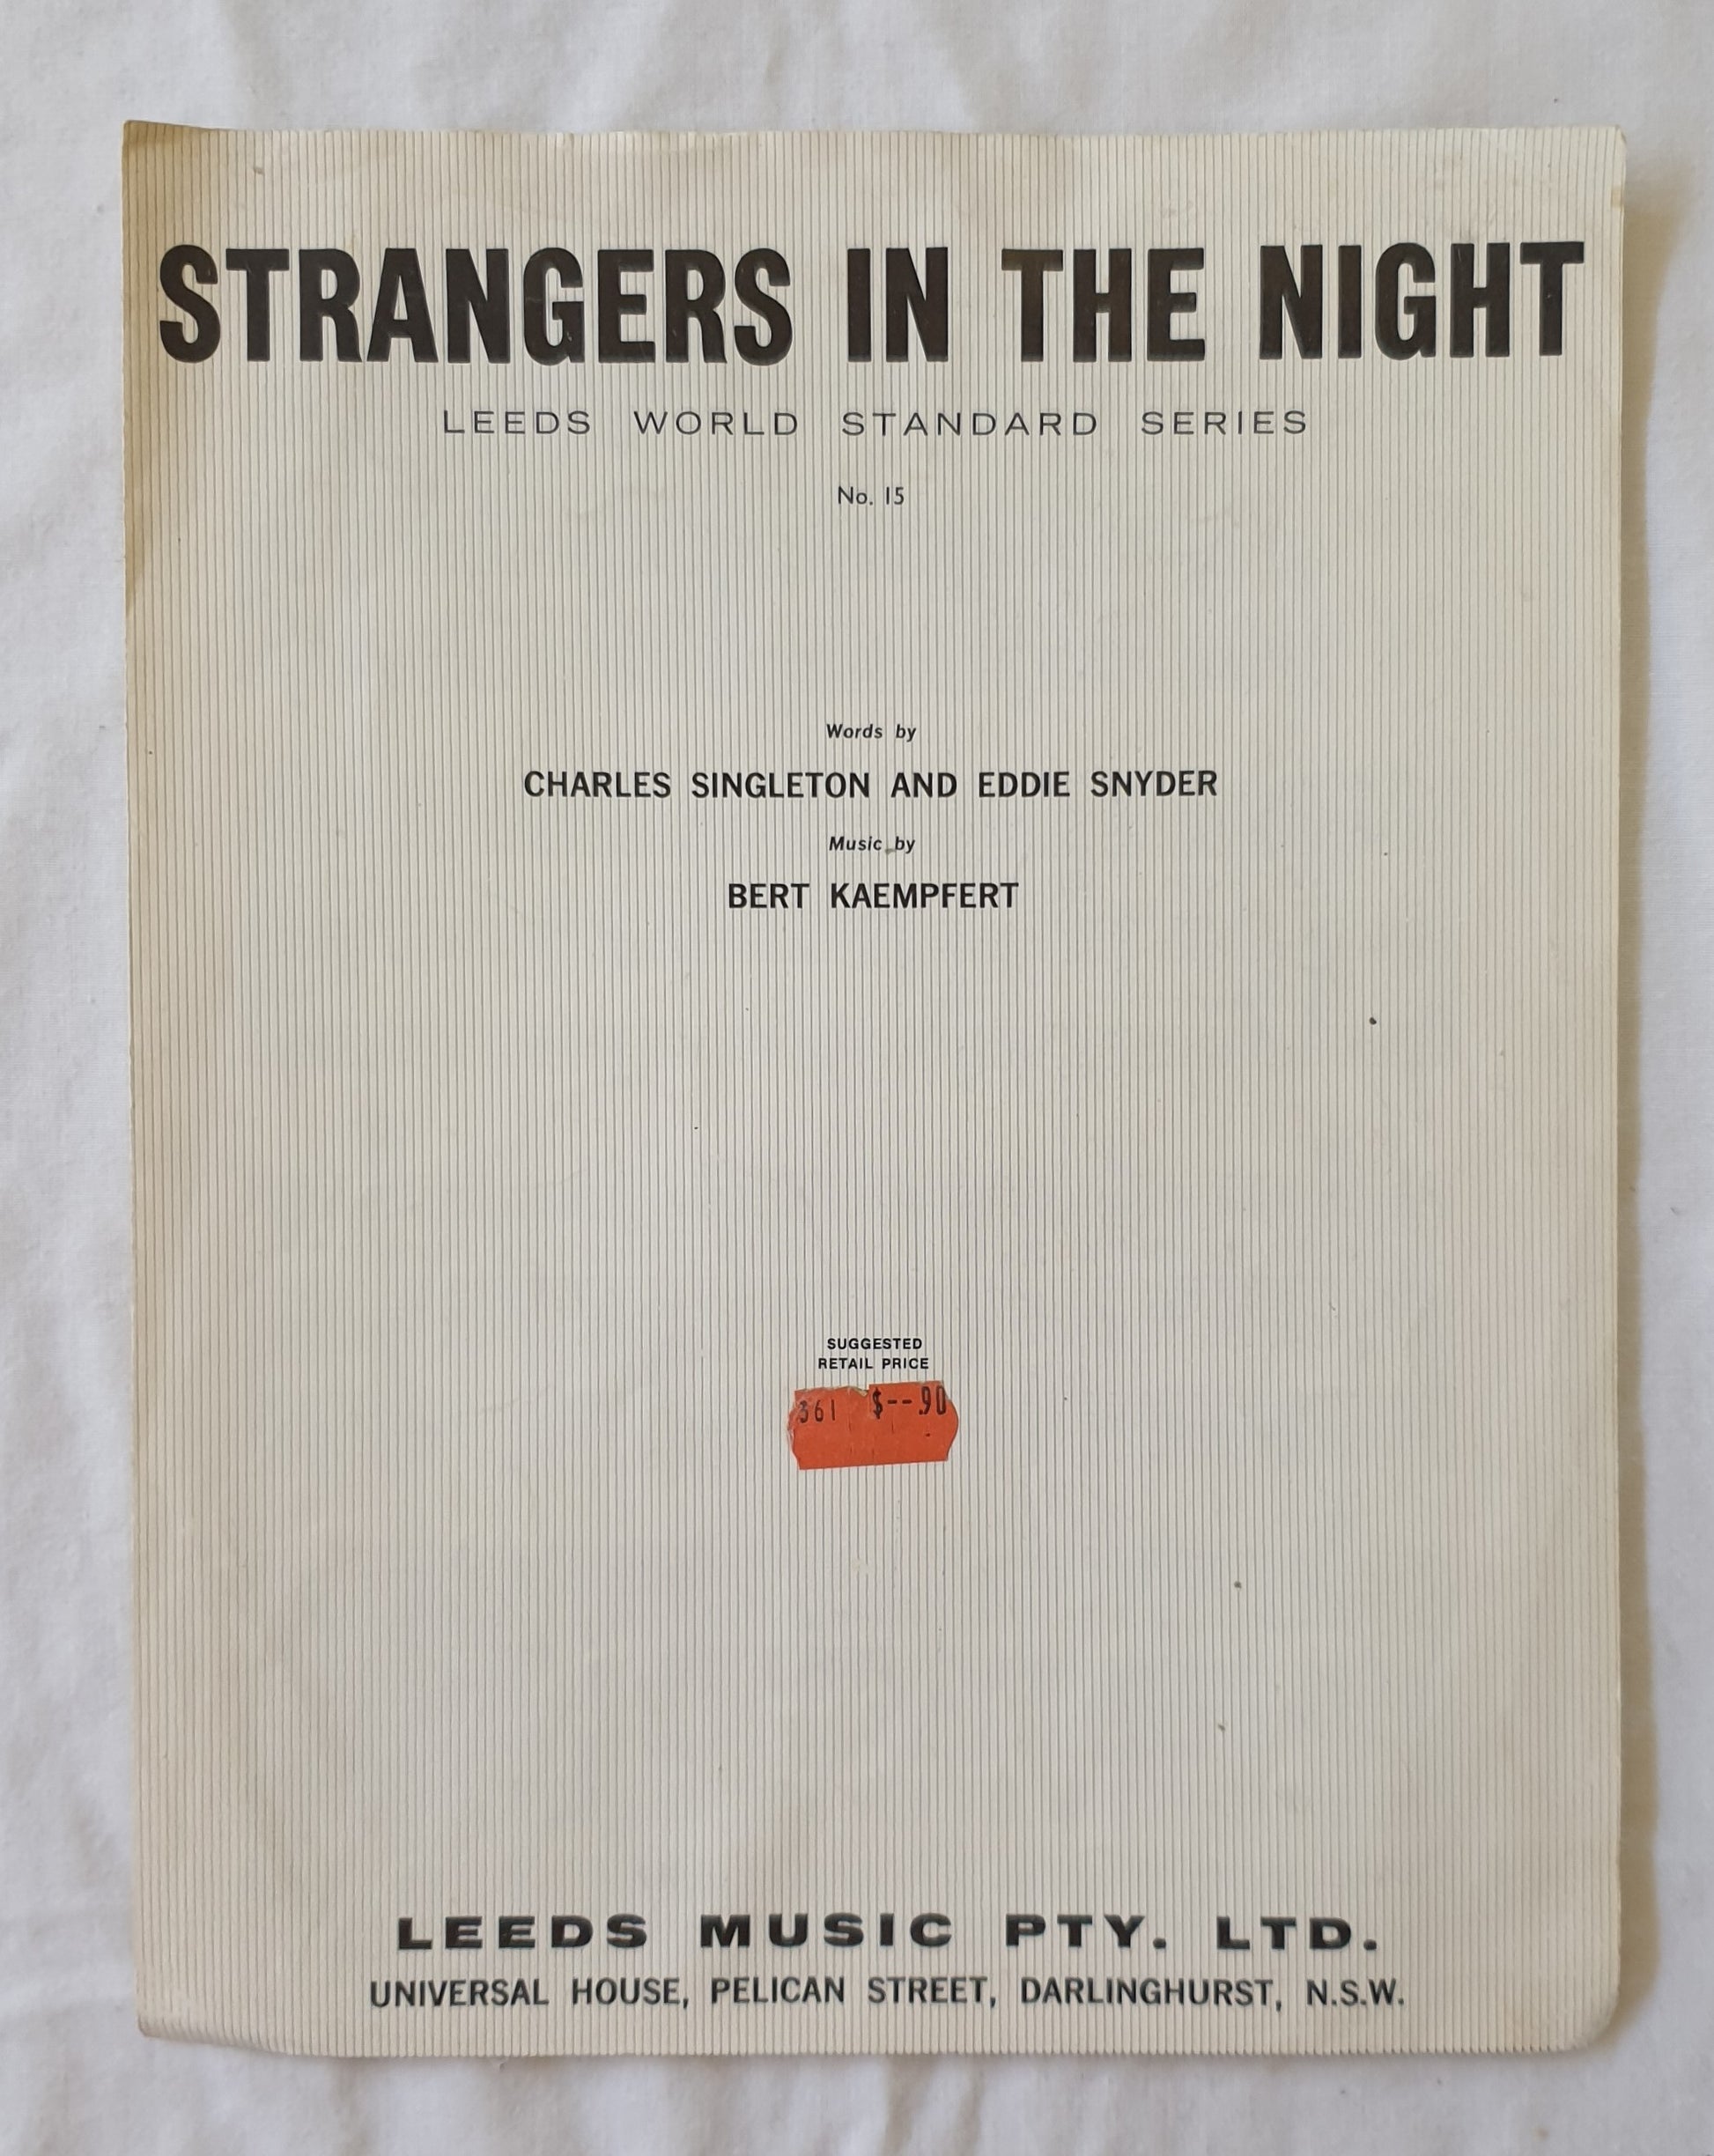 Strangers In The Night by Charles Singleton and Eddie Snyder